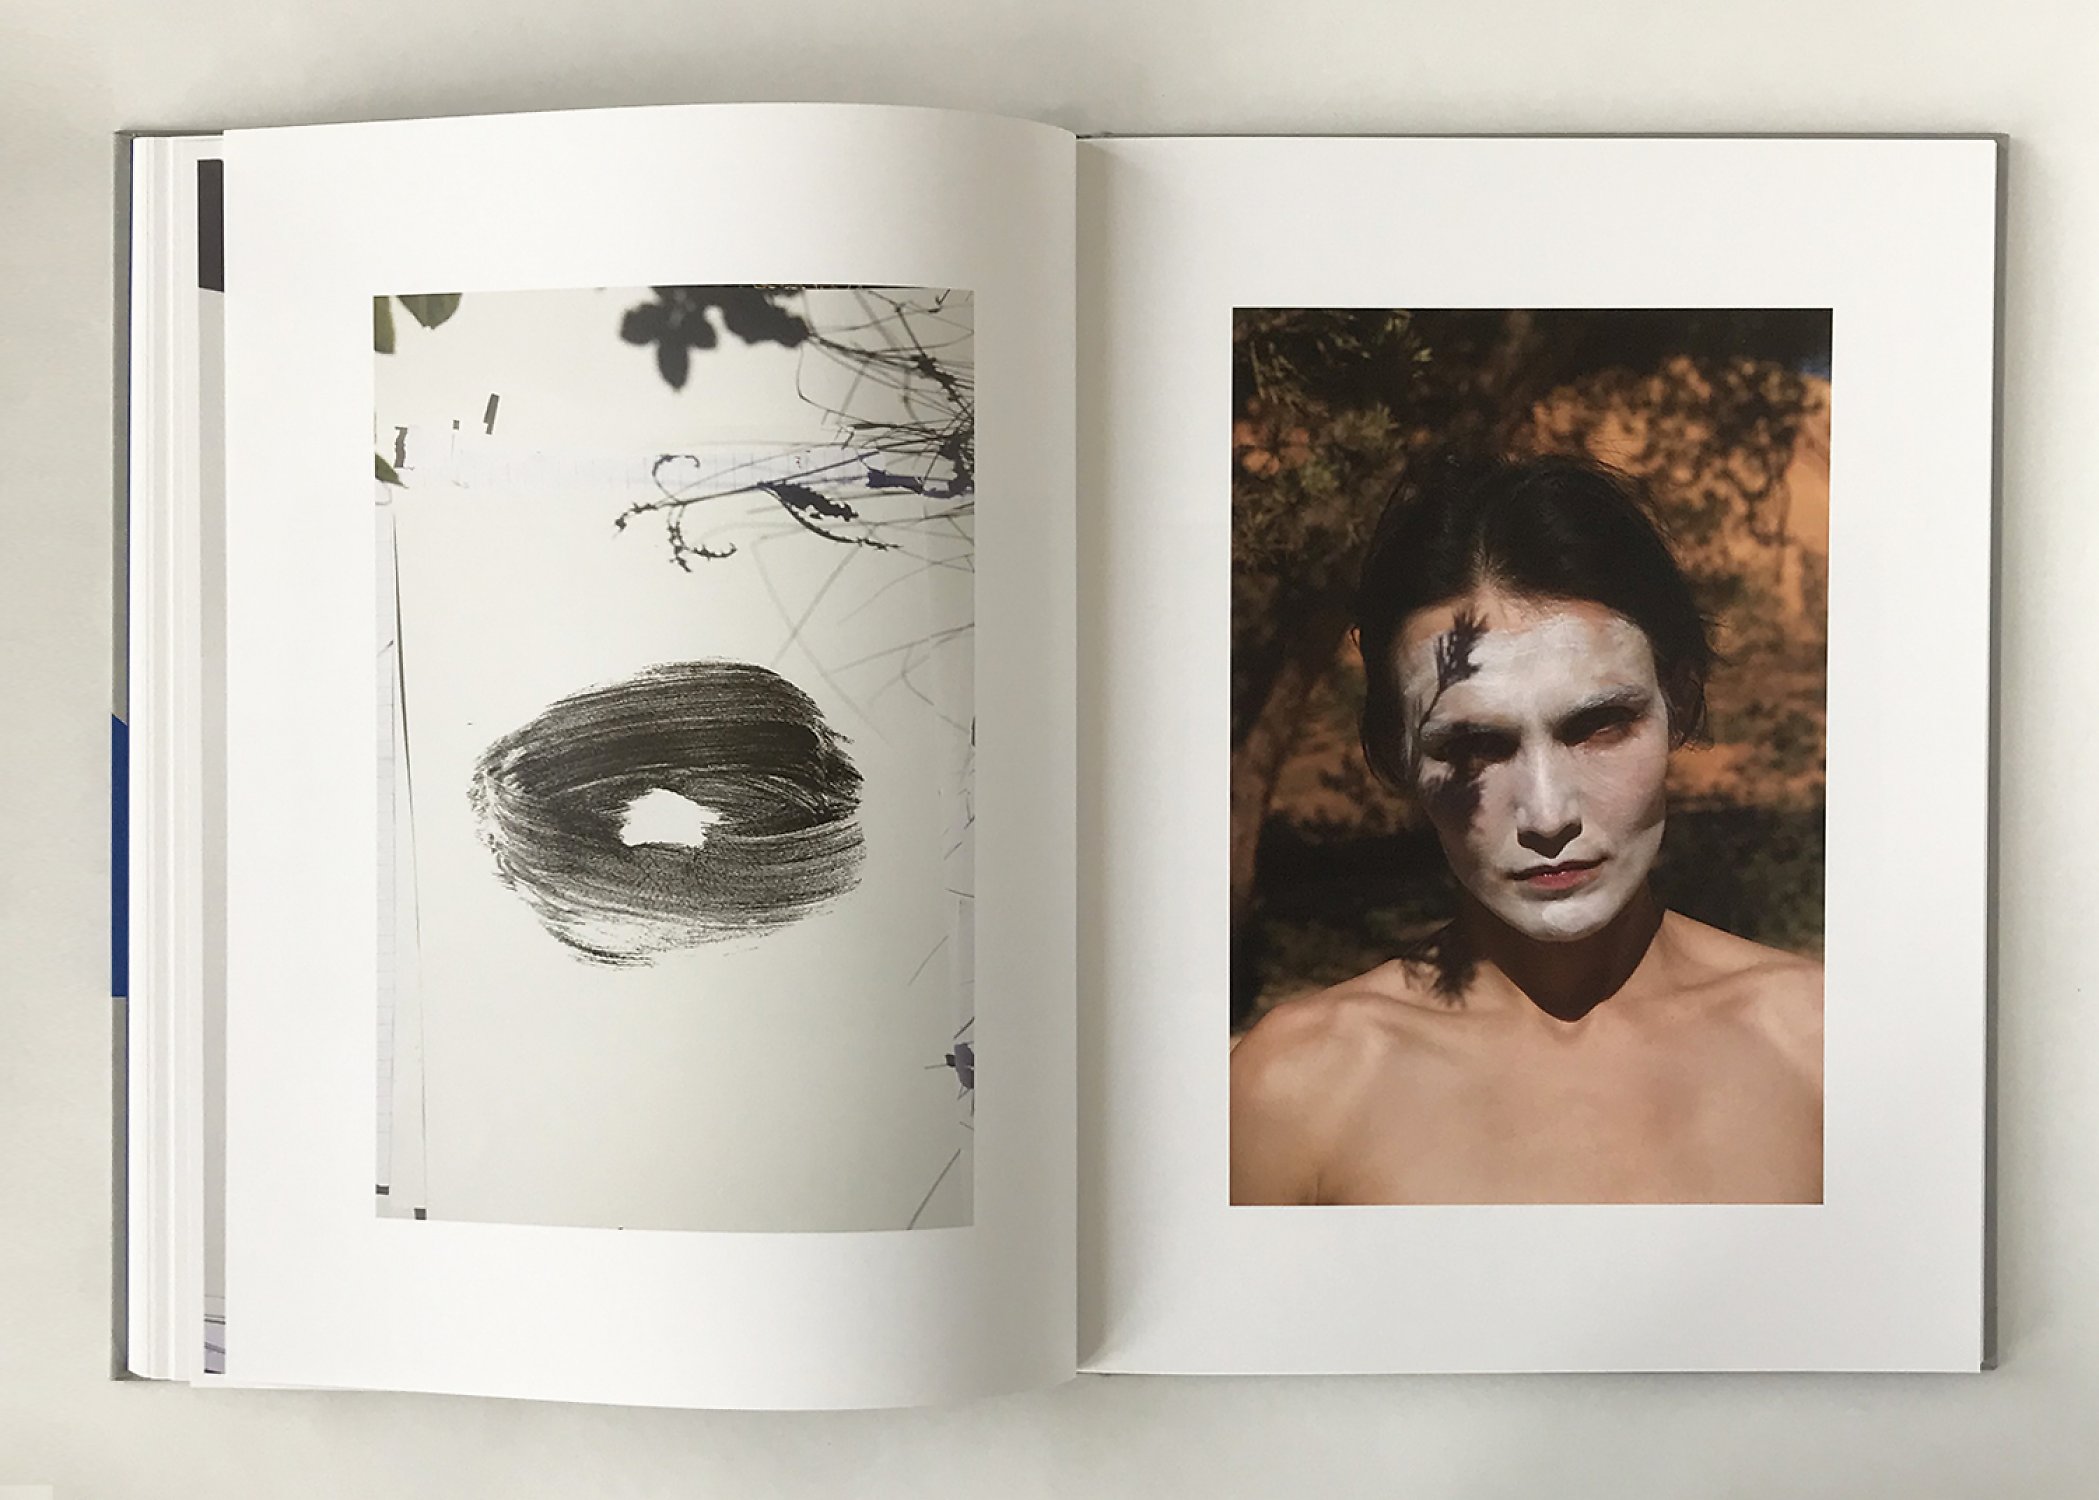 GOSEE ::: Viviane Sassen's New Photobook : ROXANE II